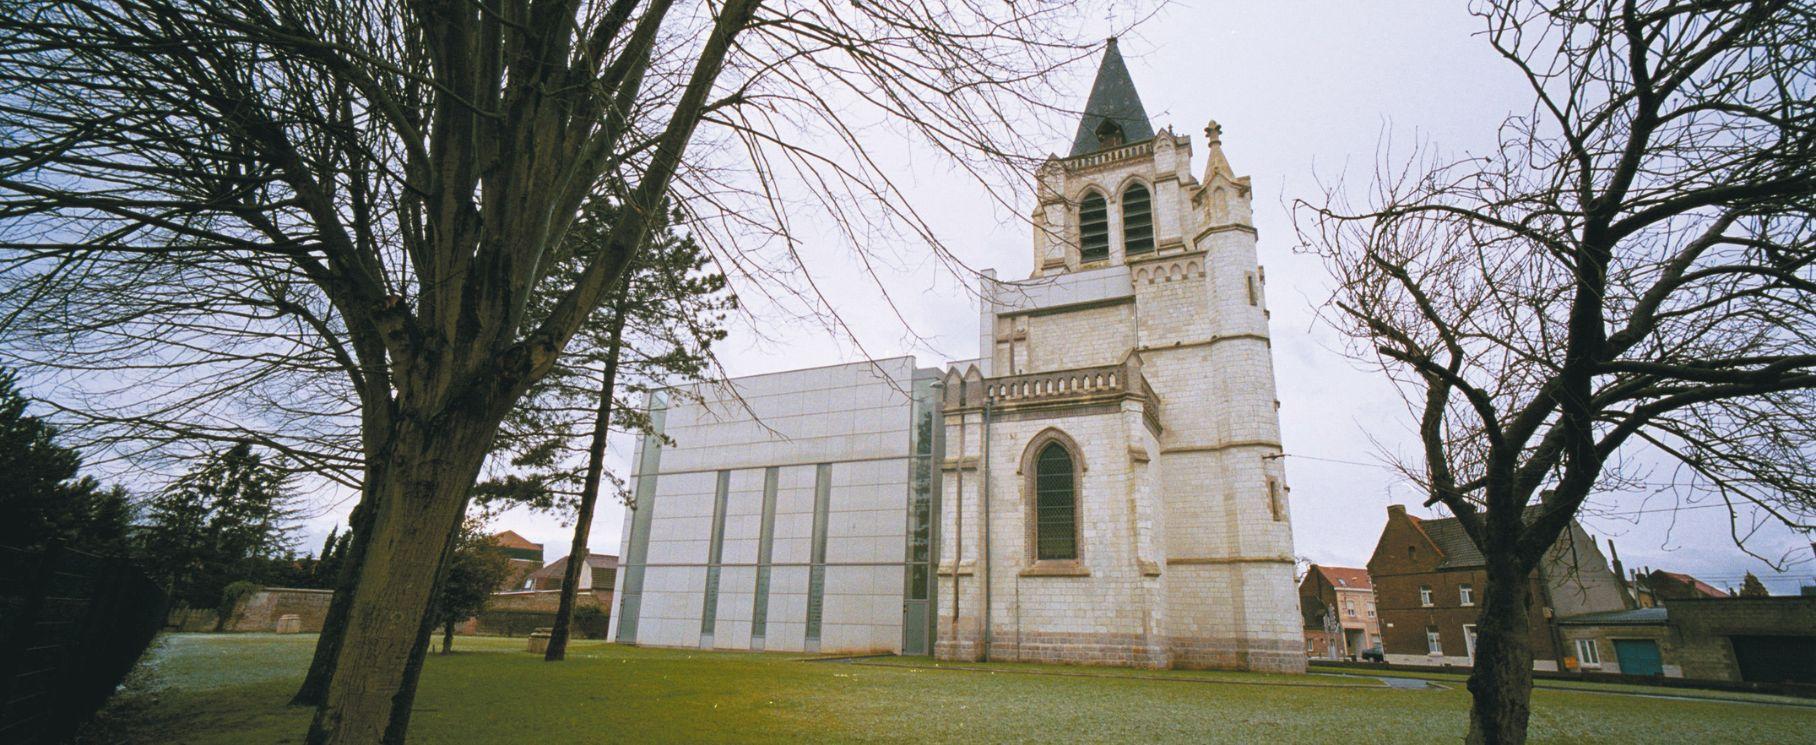 Ristrutturazione chiesa di Annoeullin | Casalgrande Padana